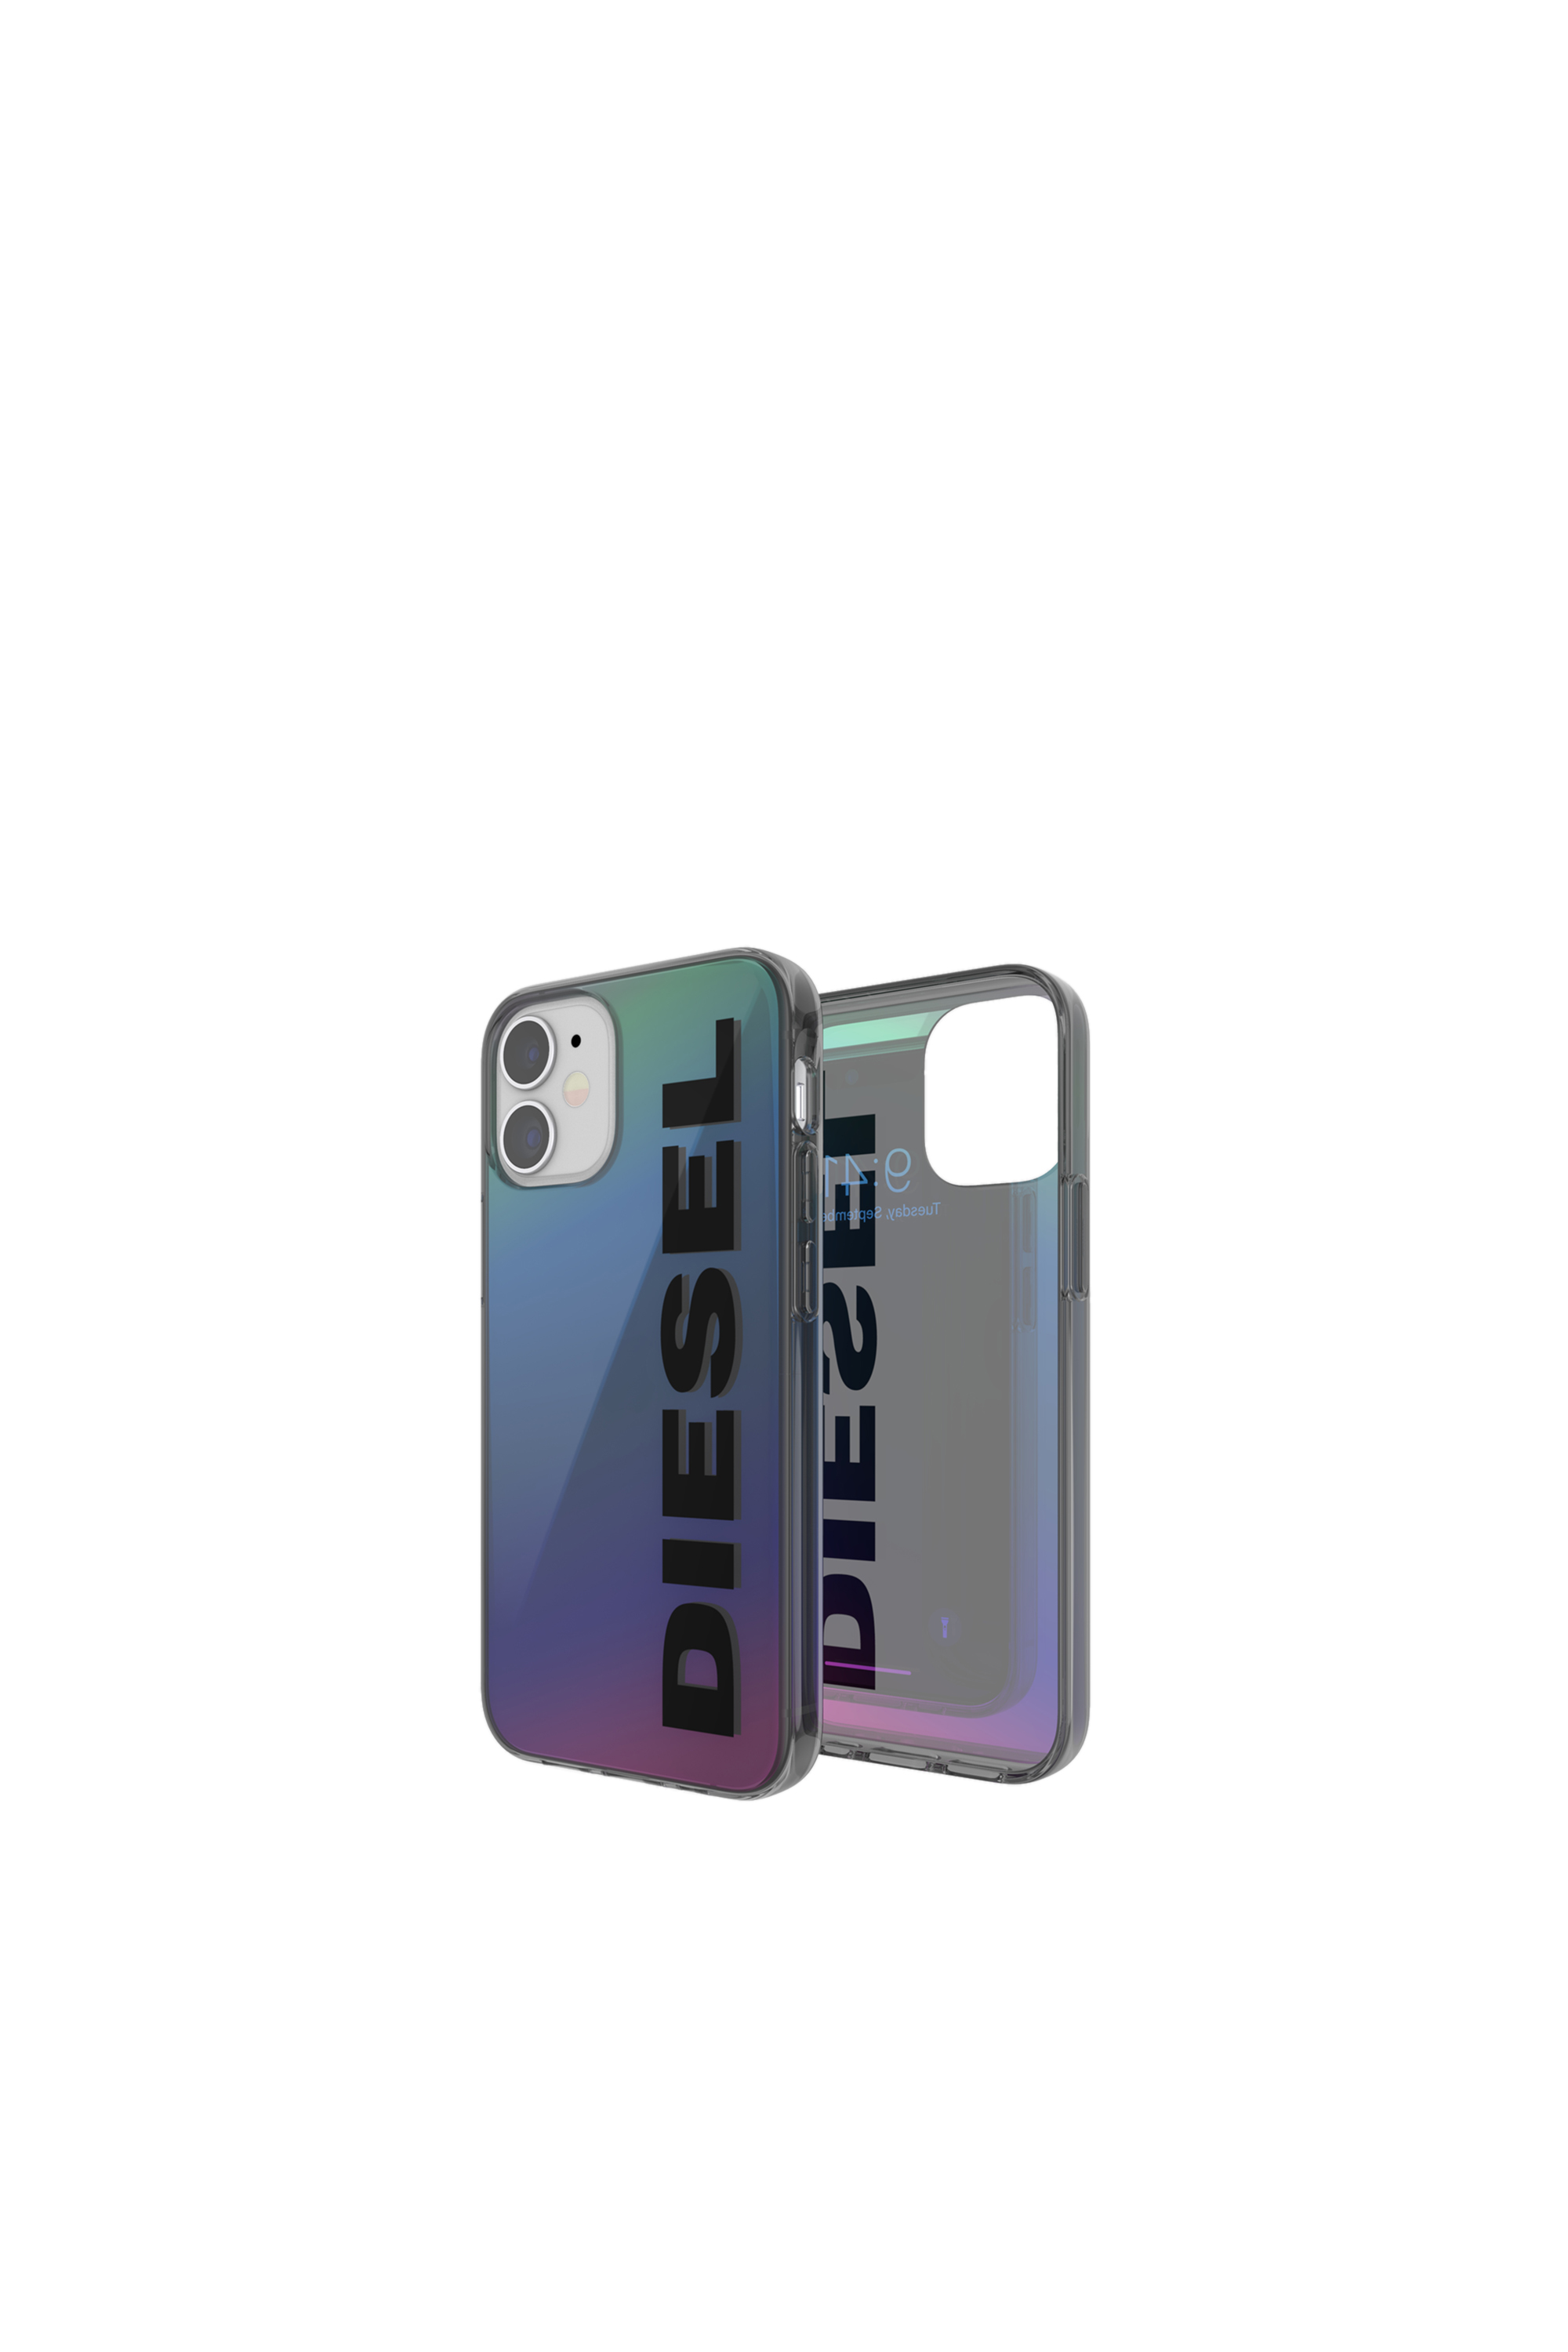 Diesel - Cover olografica in TPU per iPhone 12 Mini - Cover - Unisex - Multicolor